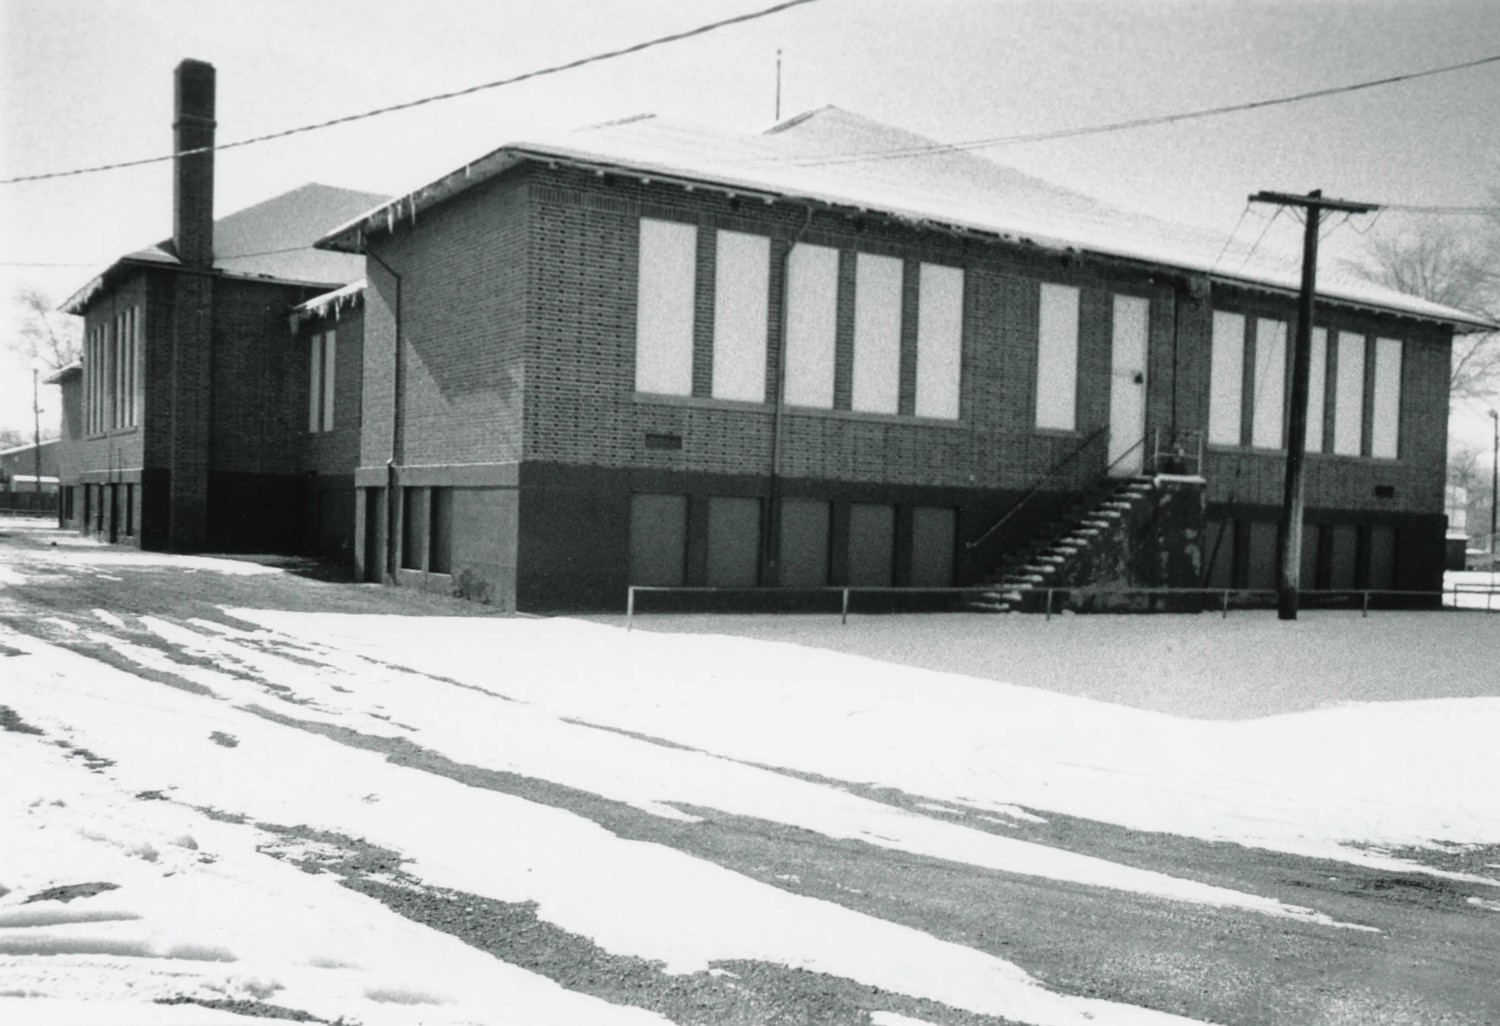 Oats Park Grammar School, Fallon Nevada North end and rear of building (1990)